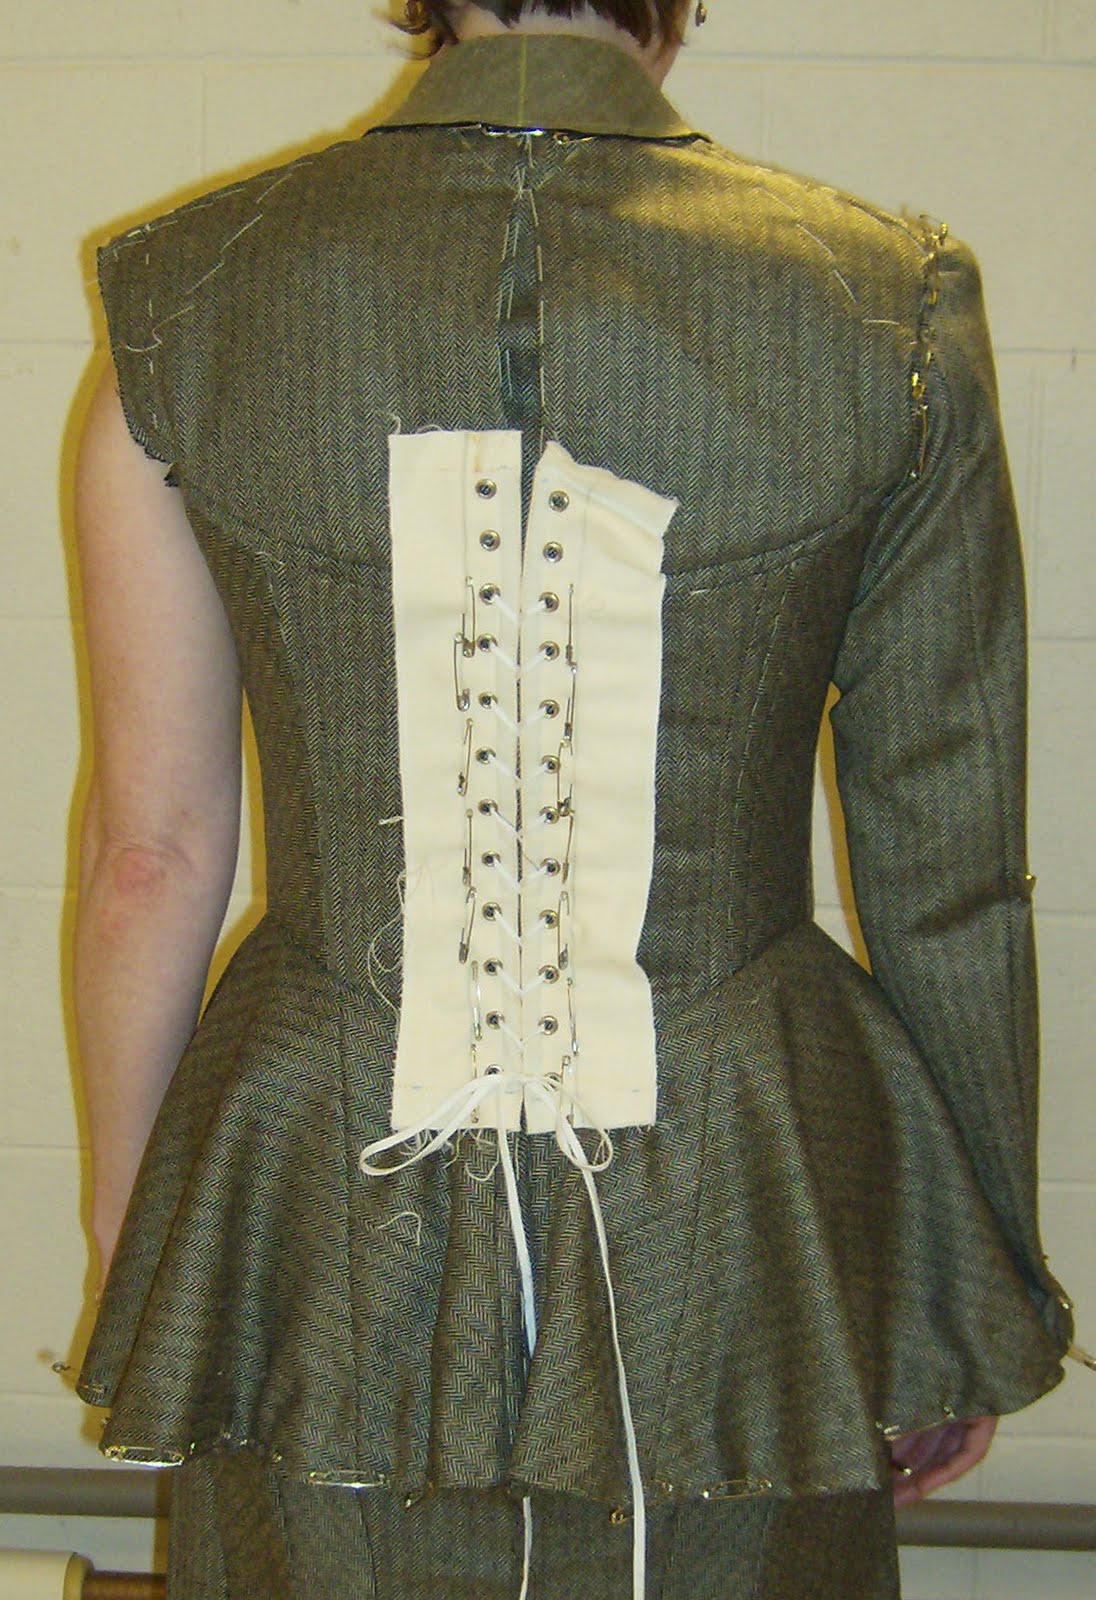 http://4.bp.blogspot.com/_-yKA_LPBwGc/TJ4TElJt1SI/AAAAAAAAA8k/1X2Fz0dRggQ/s1600/corsetsuitbackdetail.jpg